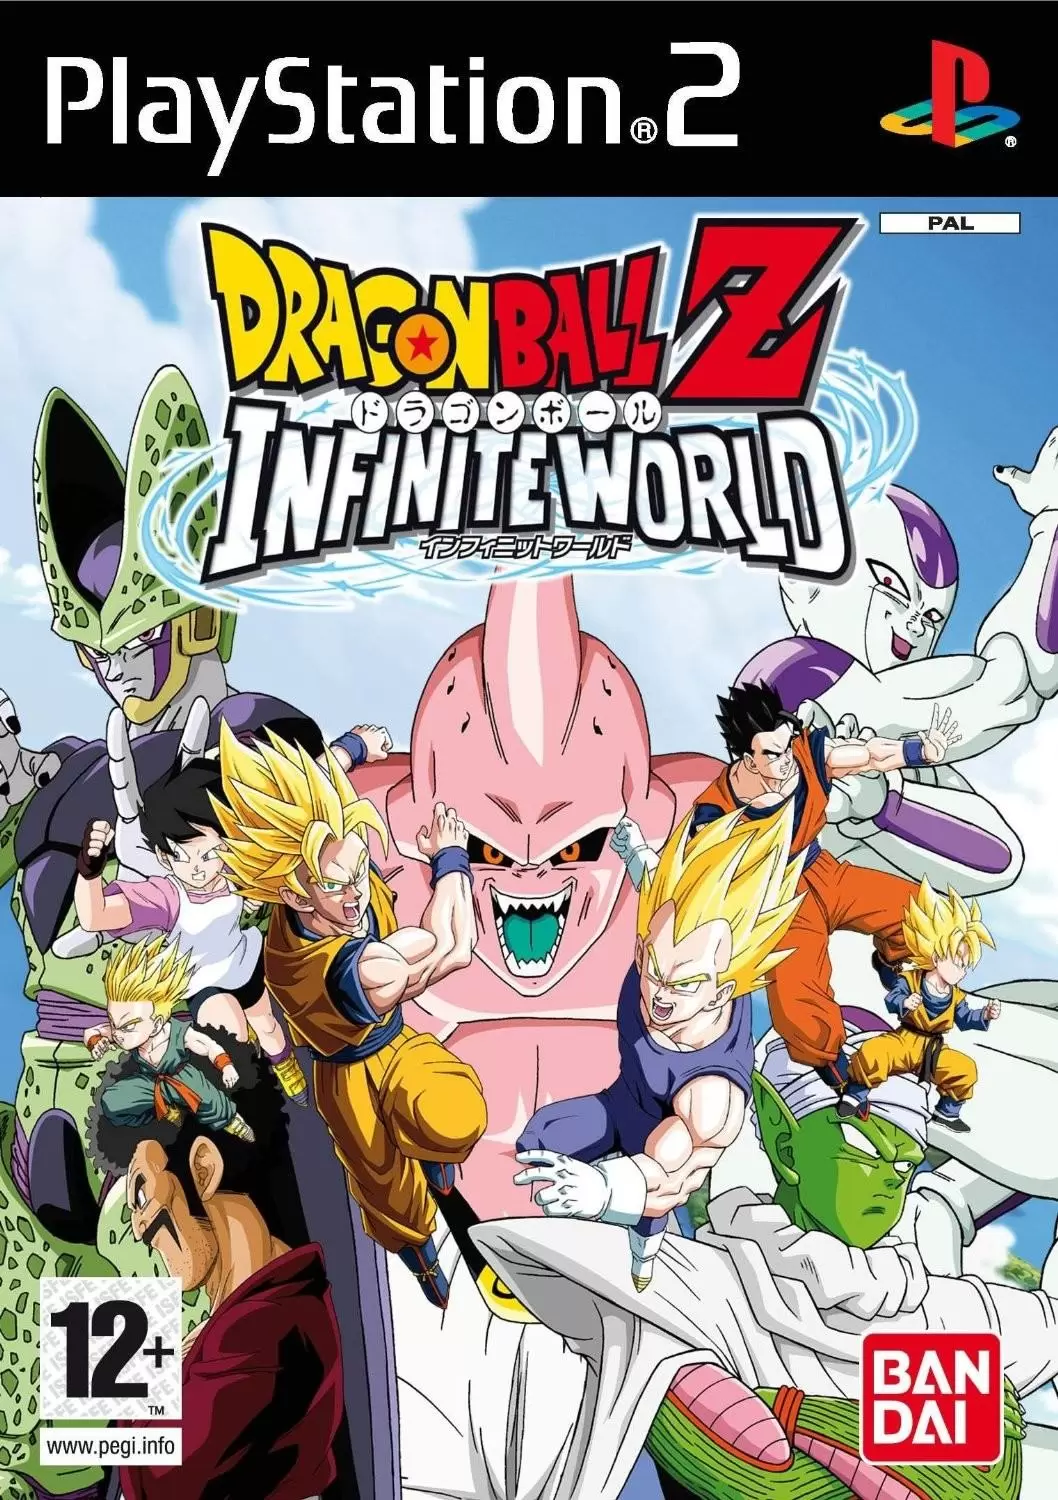 PS2 Games - Dragon Ball Z: Infinite World